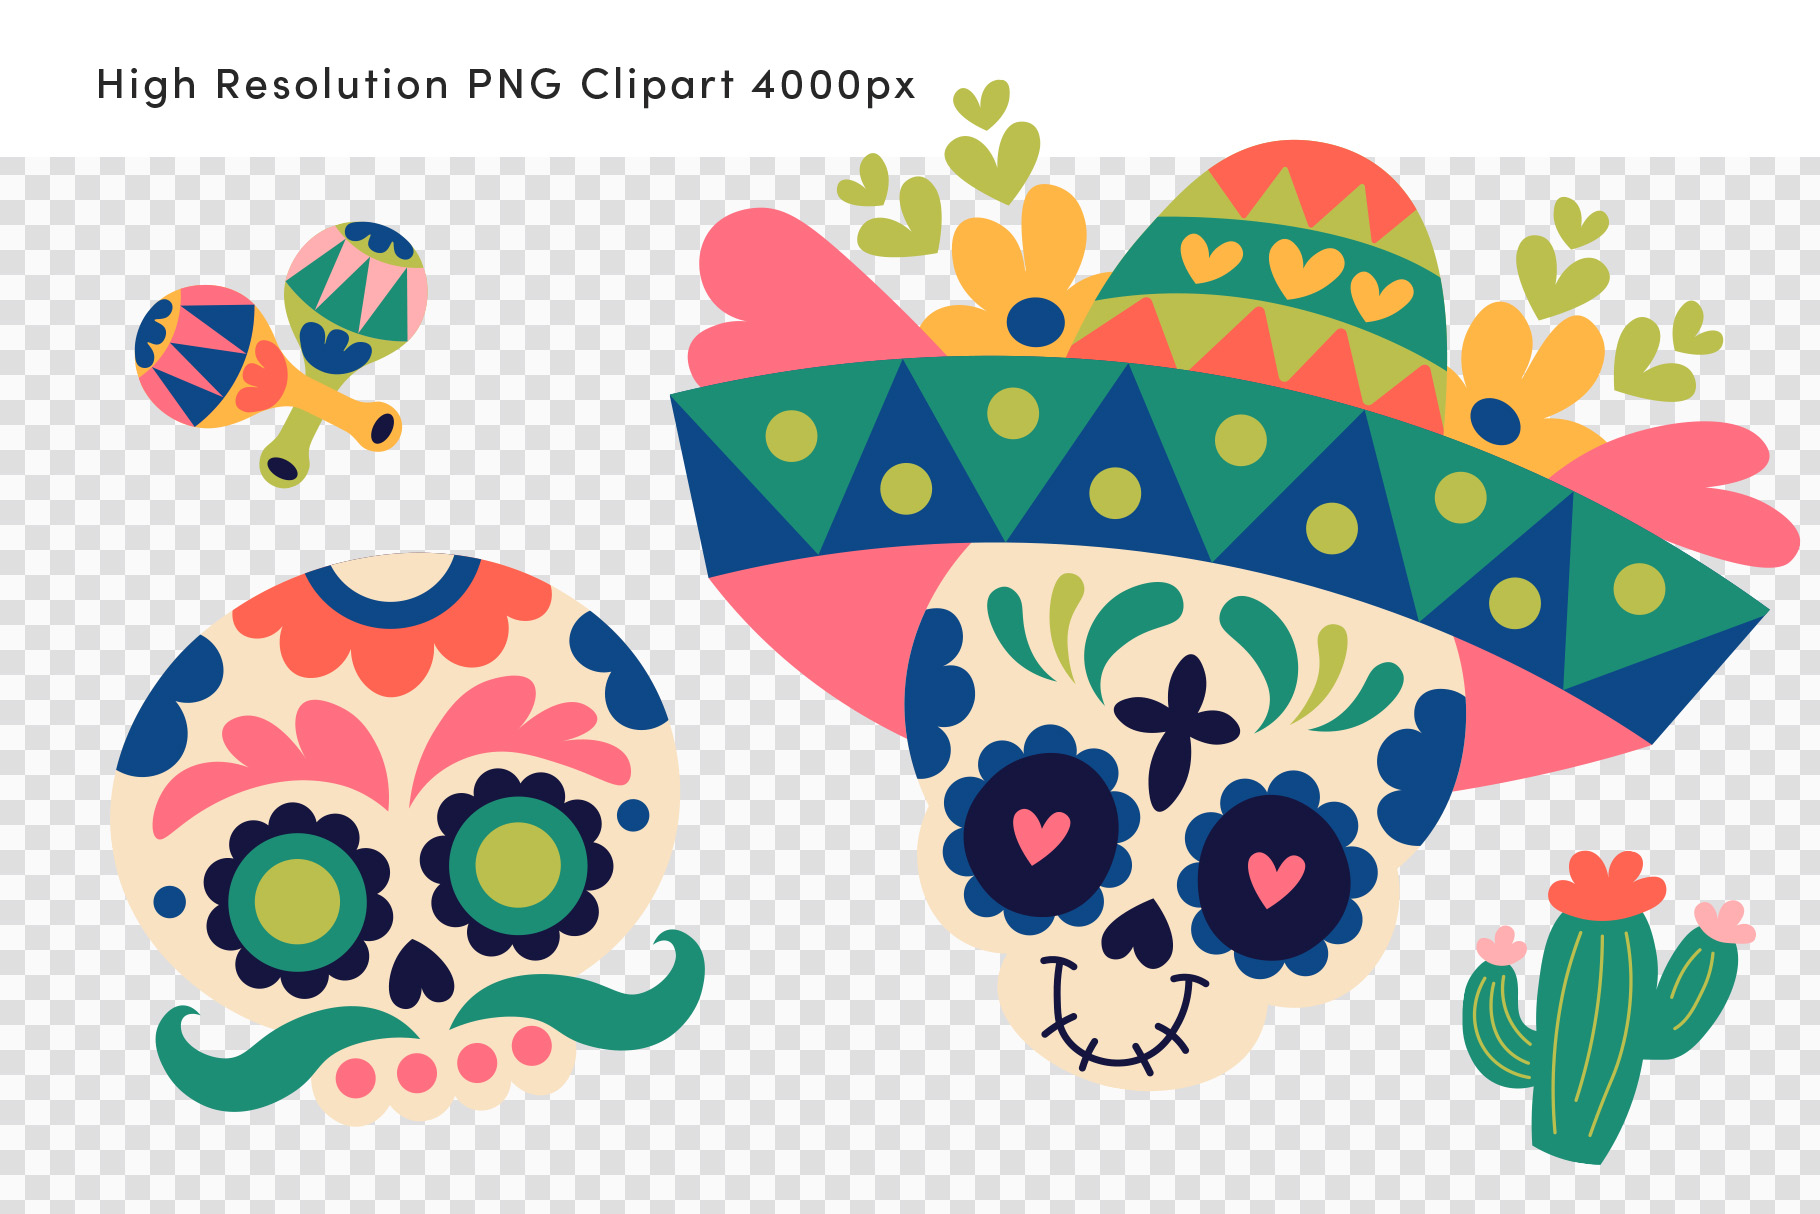 Mexican Sugar Skull Illustrations Set (AI, EPS, PNG Format)